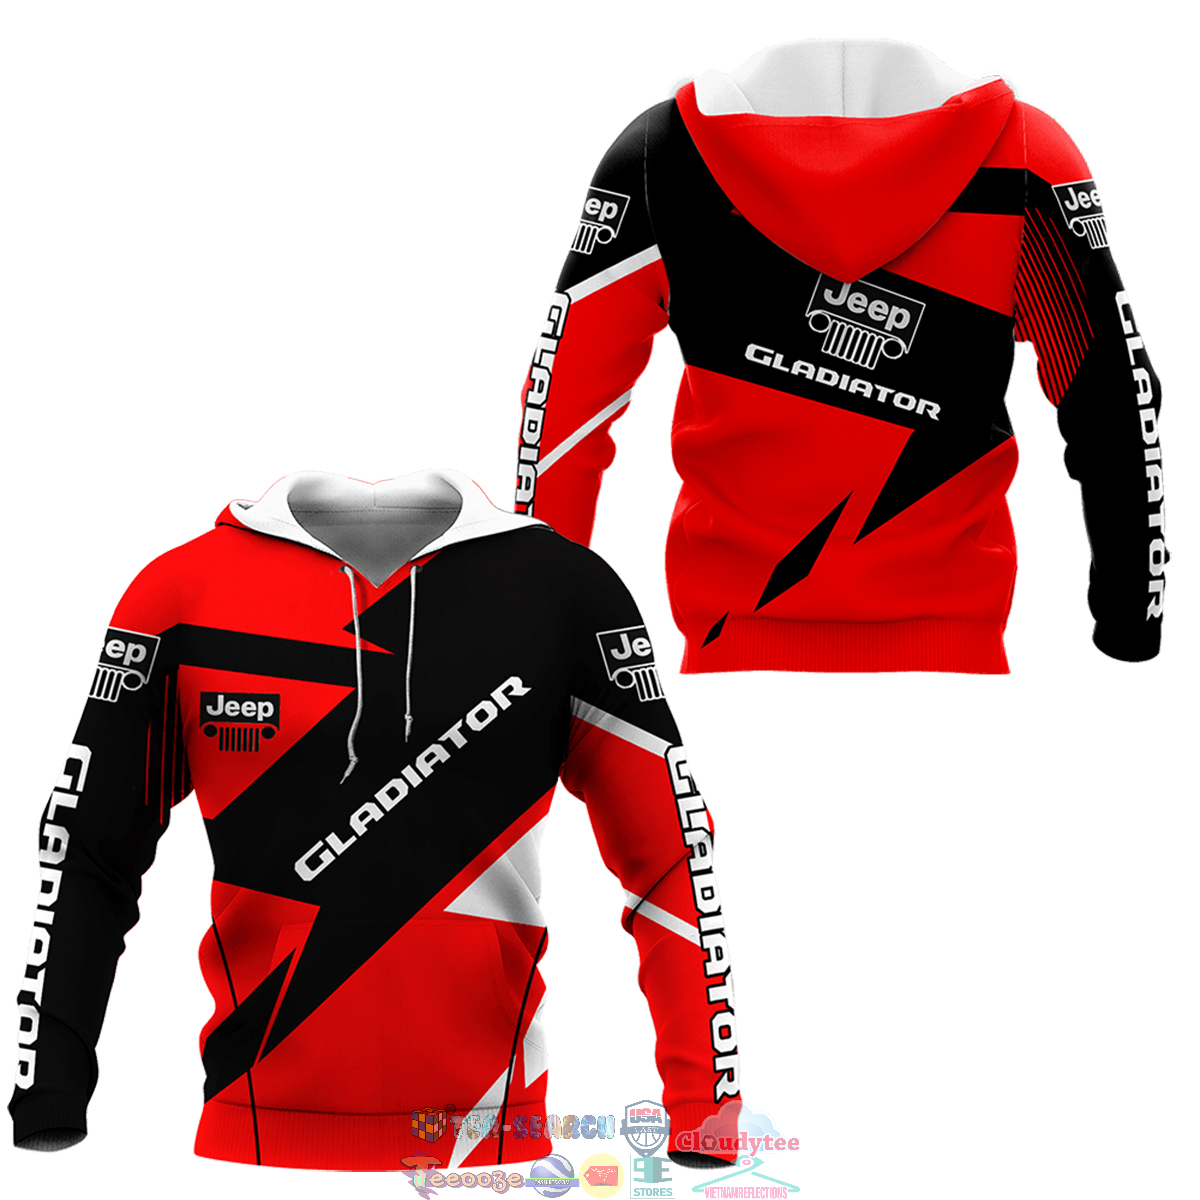 zJhTbiXm-TH050822-23xxxJeep-Gladiator-ver-2-3D-hoodie-and-t-shirt3.jpg